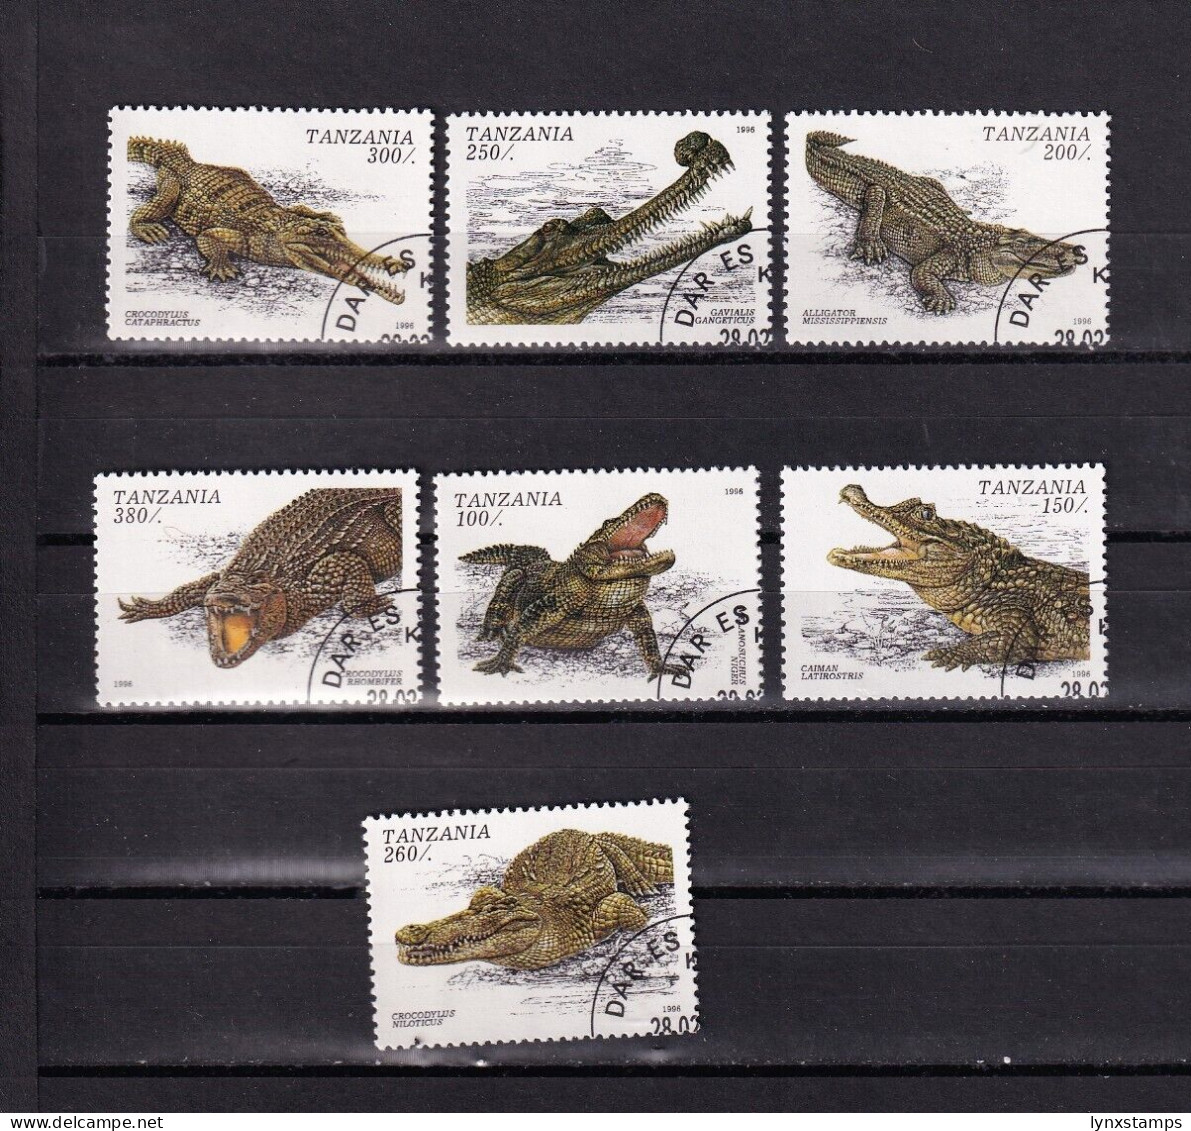 SA02 Tanzania 1996 Armored Lizard Used Stamps - Tanzania (1964-...)